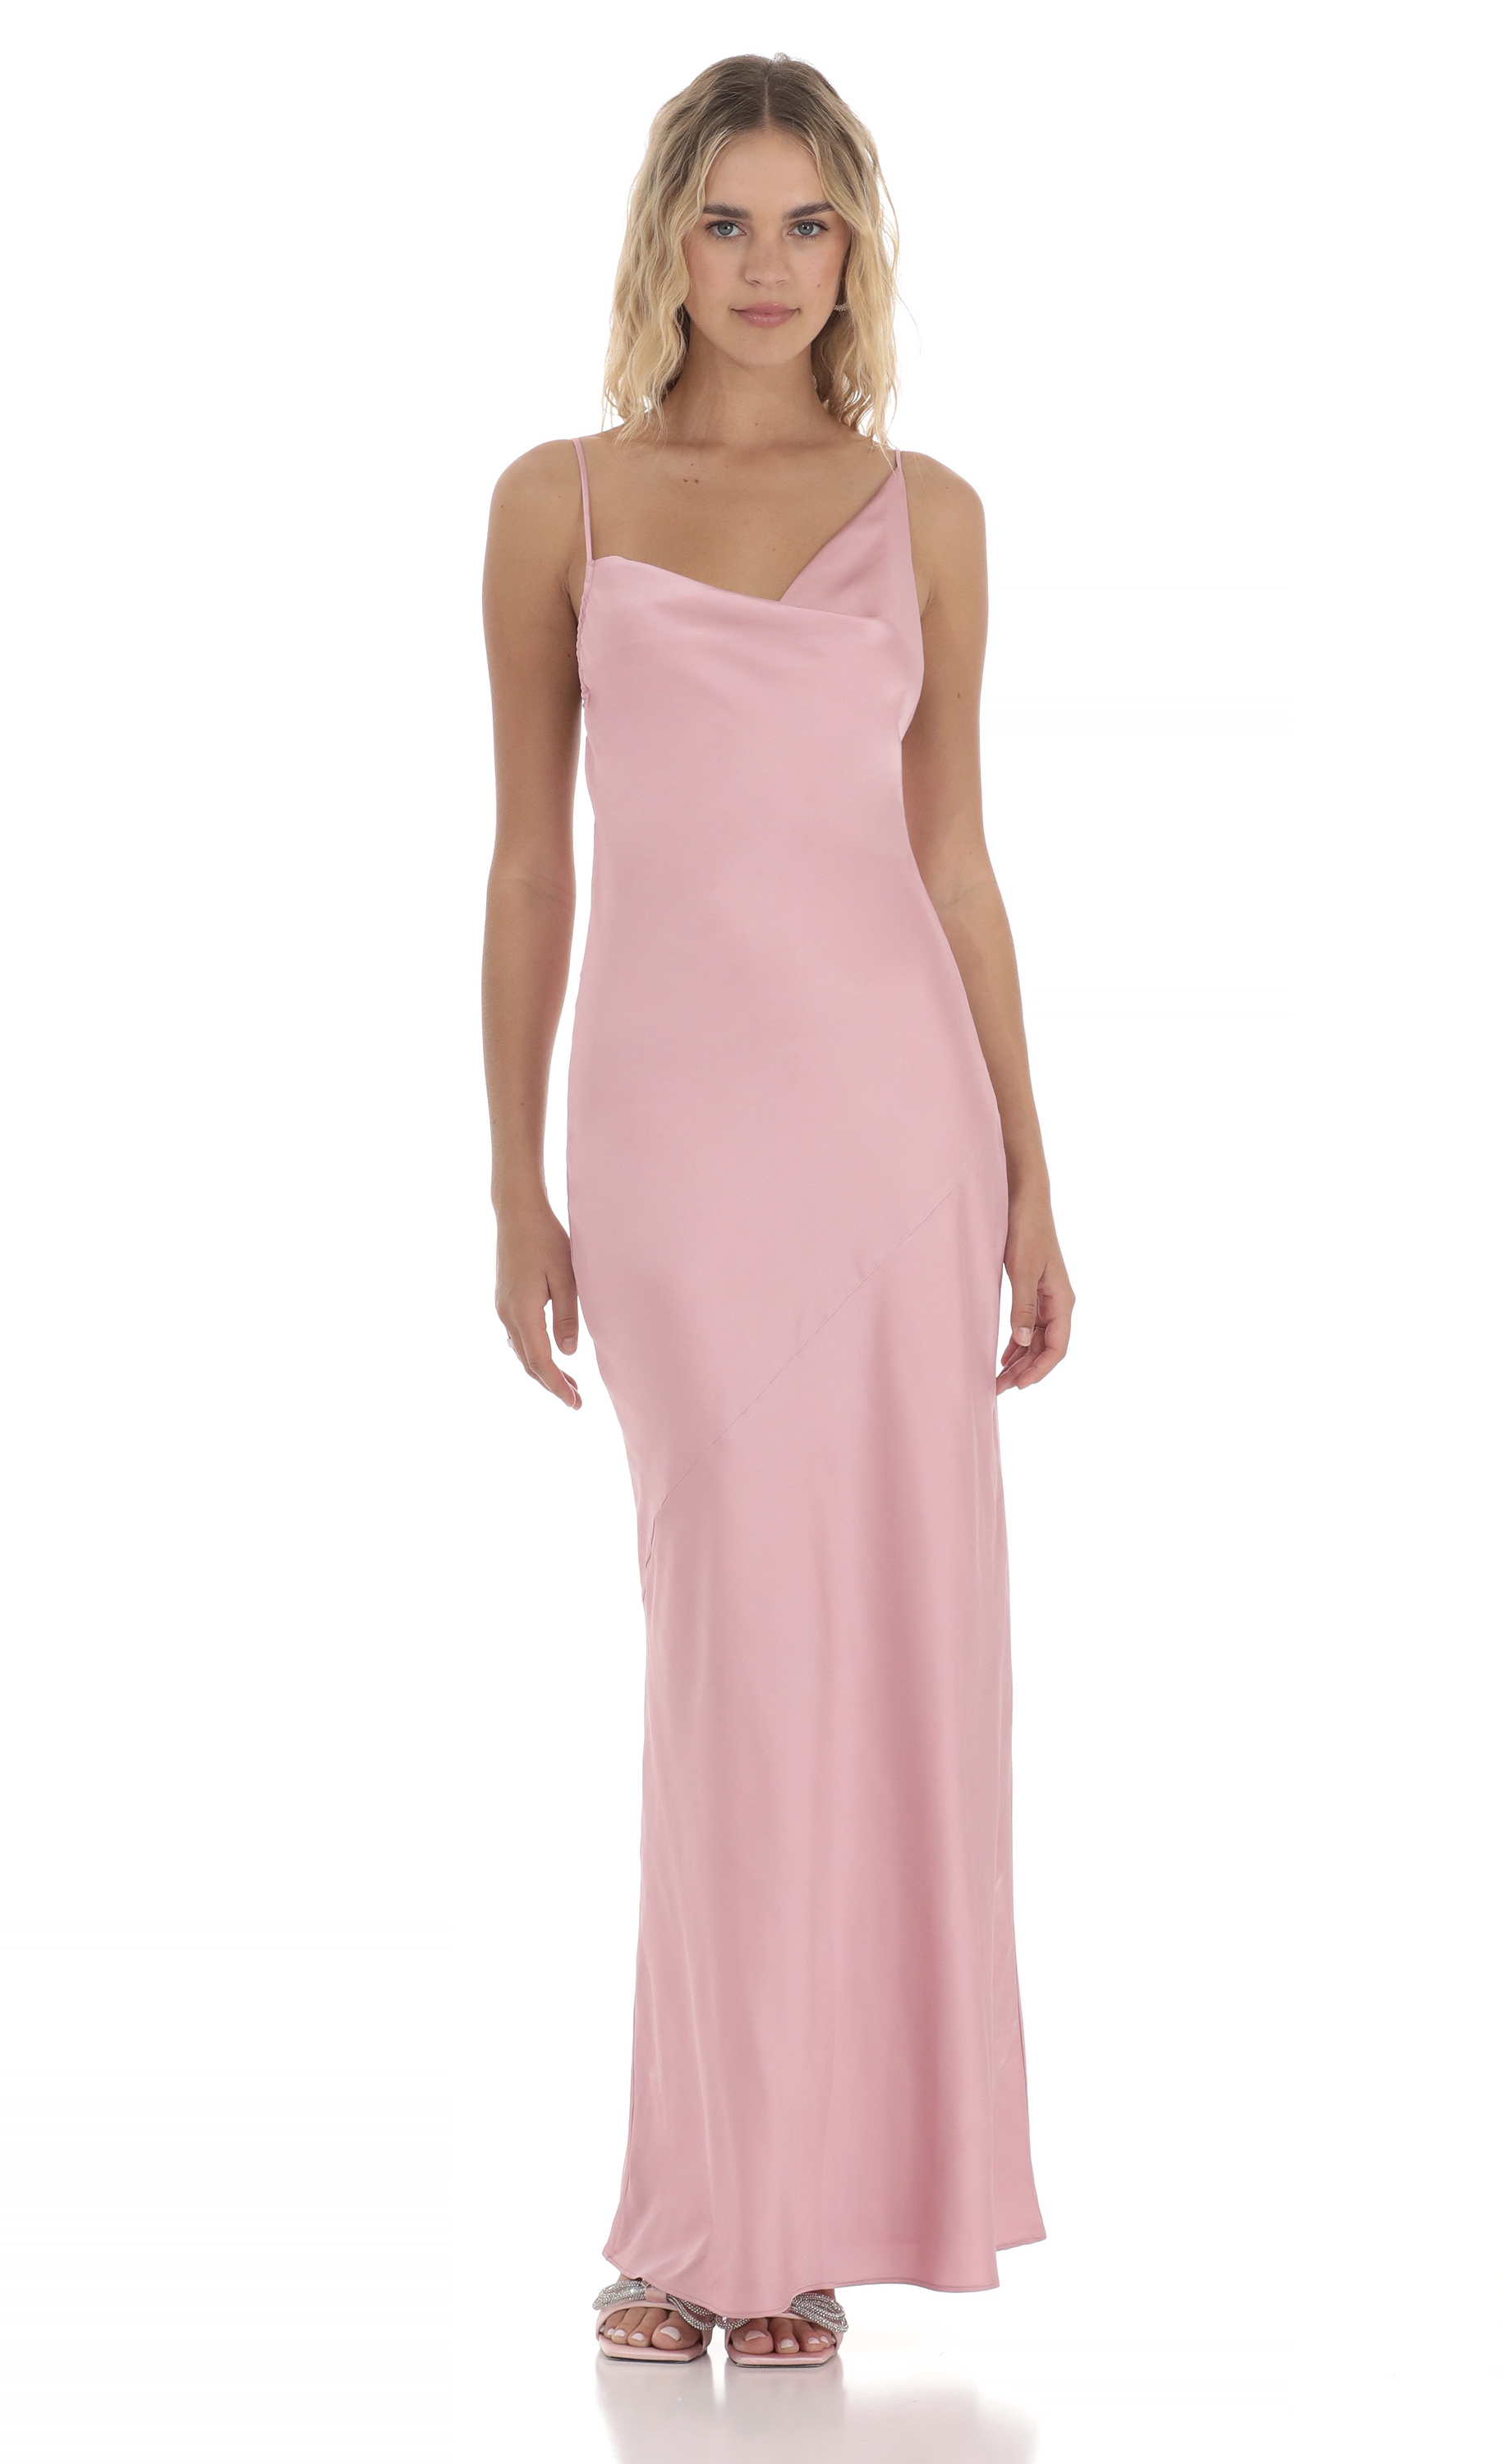 Satin Asymmetrical Cowl Neck Maxi Dress in Pink